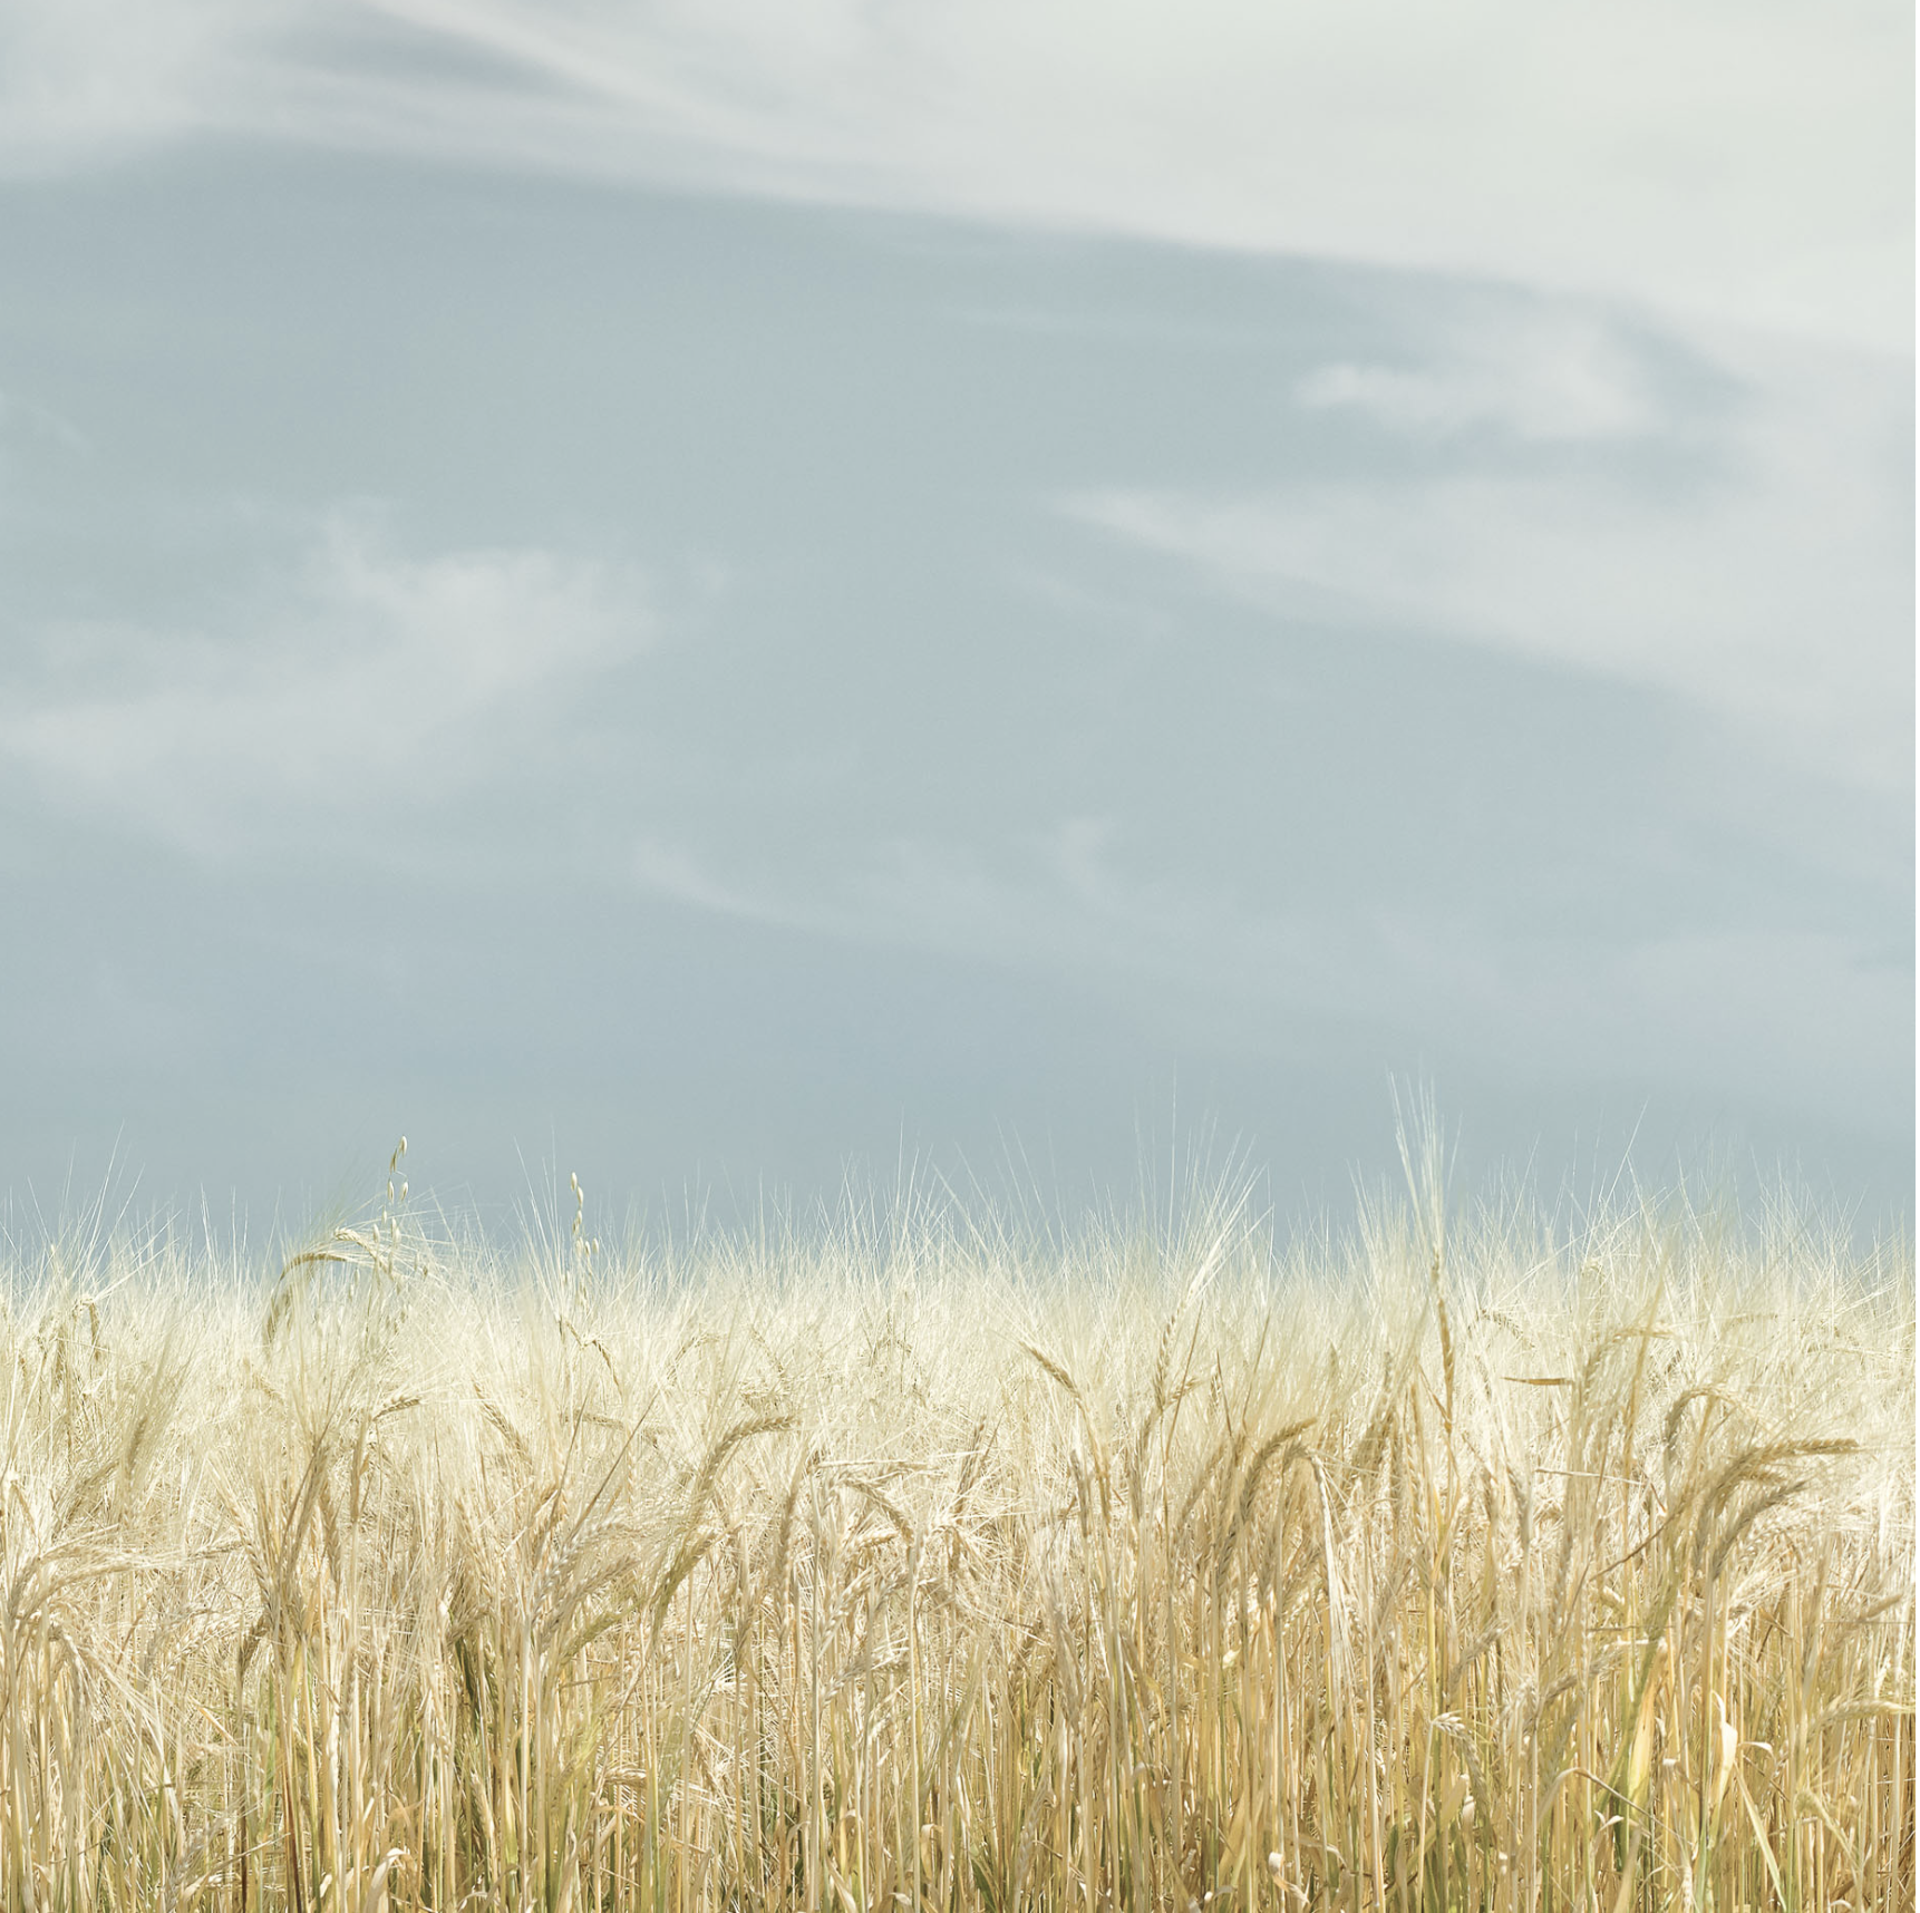 Wheat Study 1 by Jim Westphalen